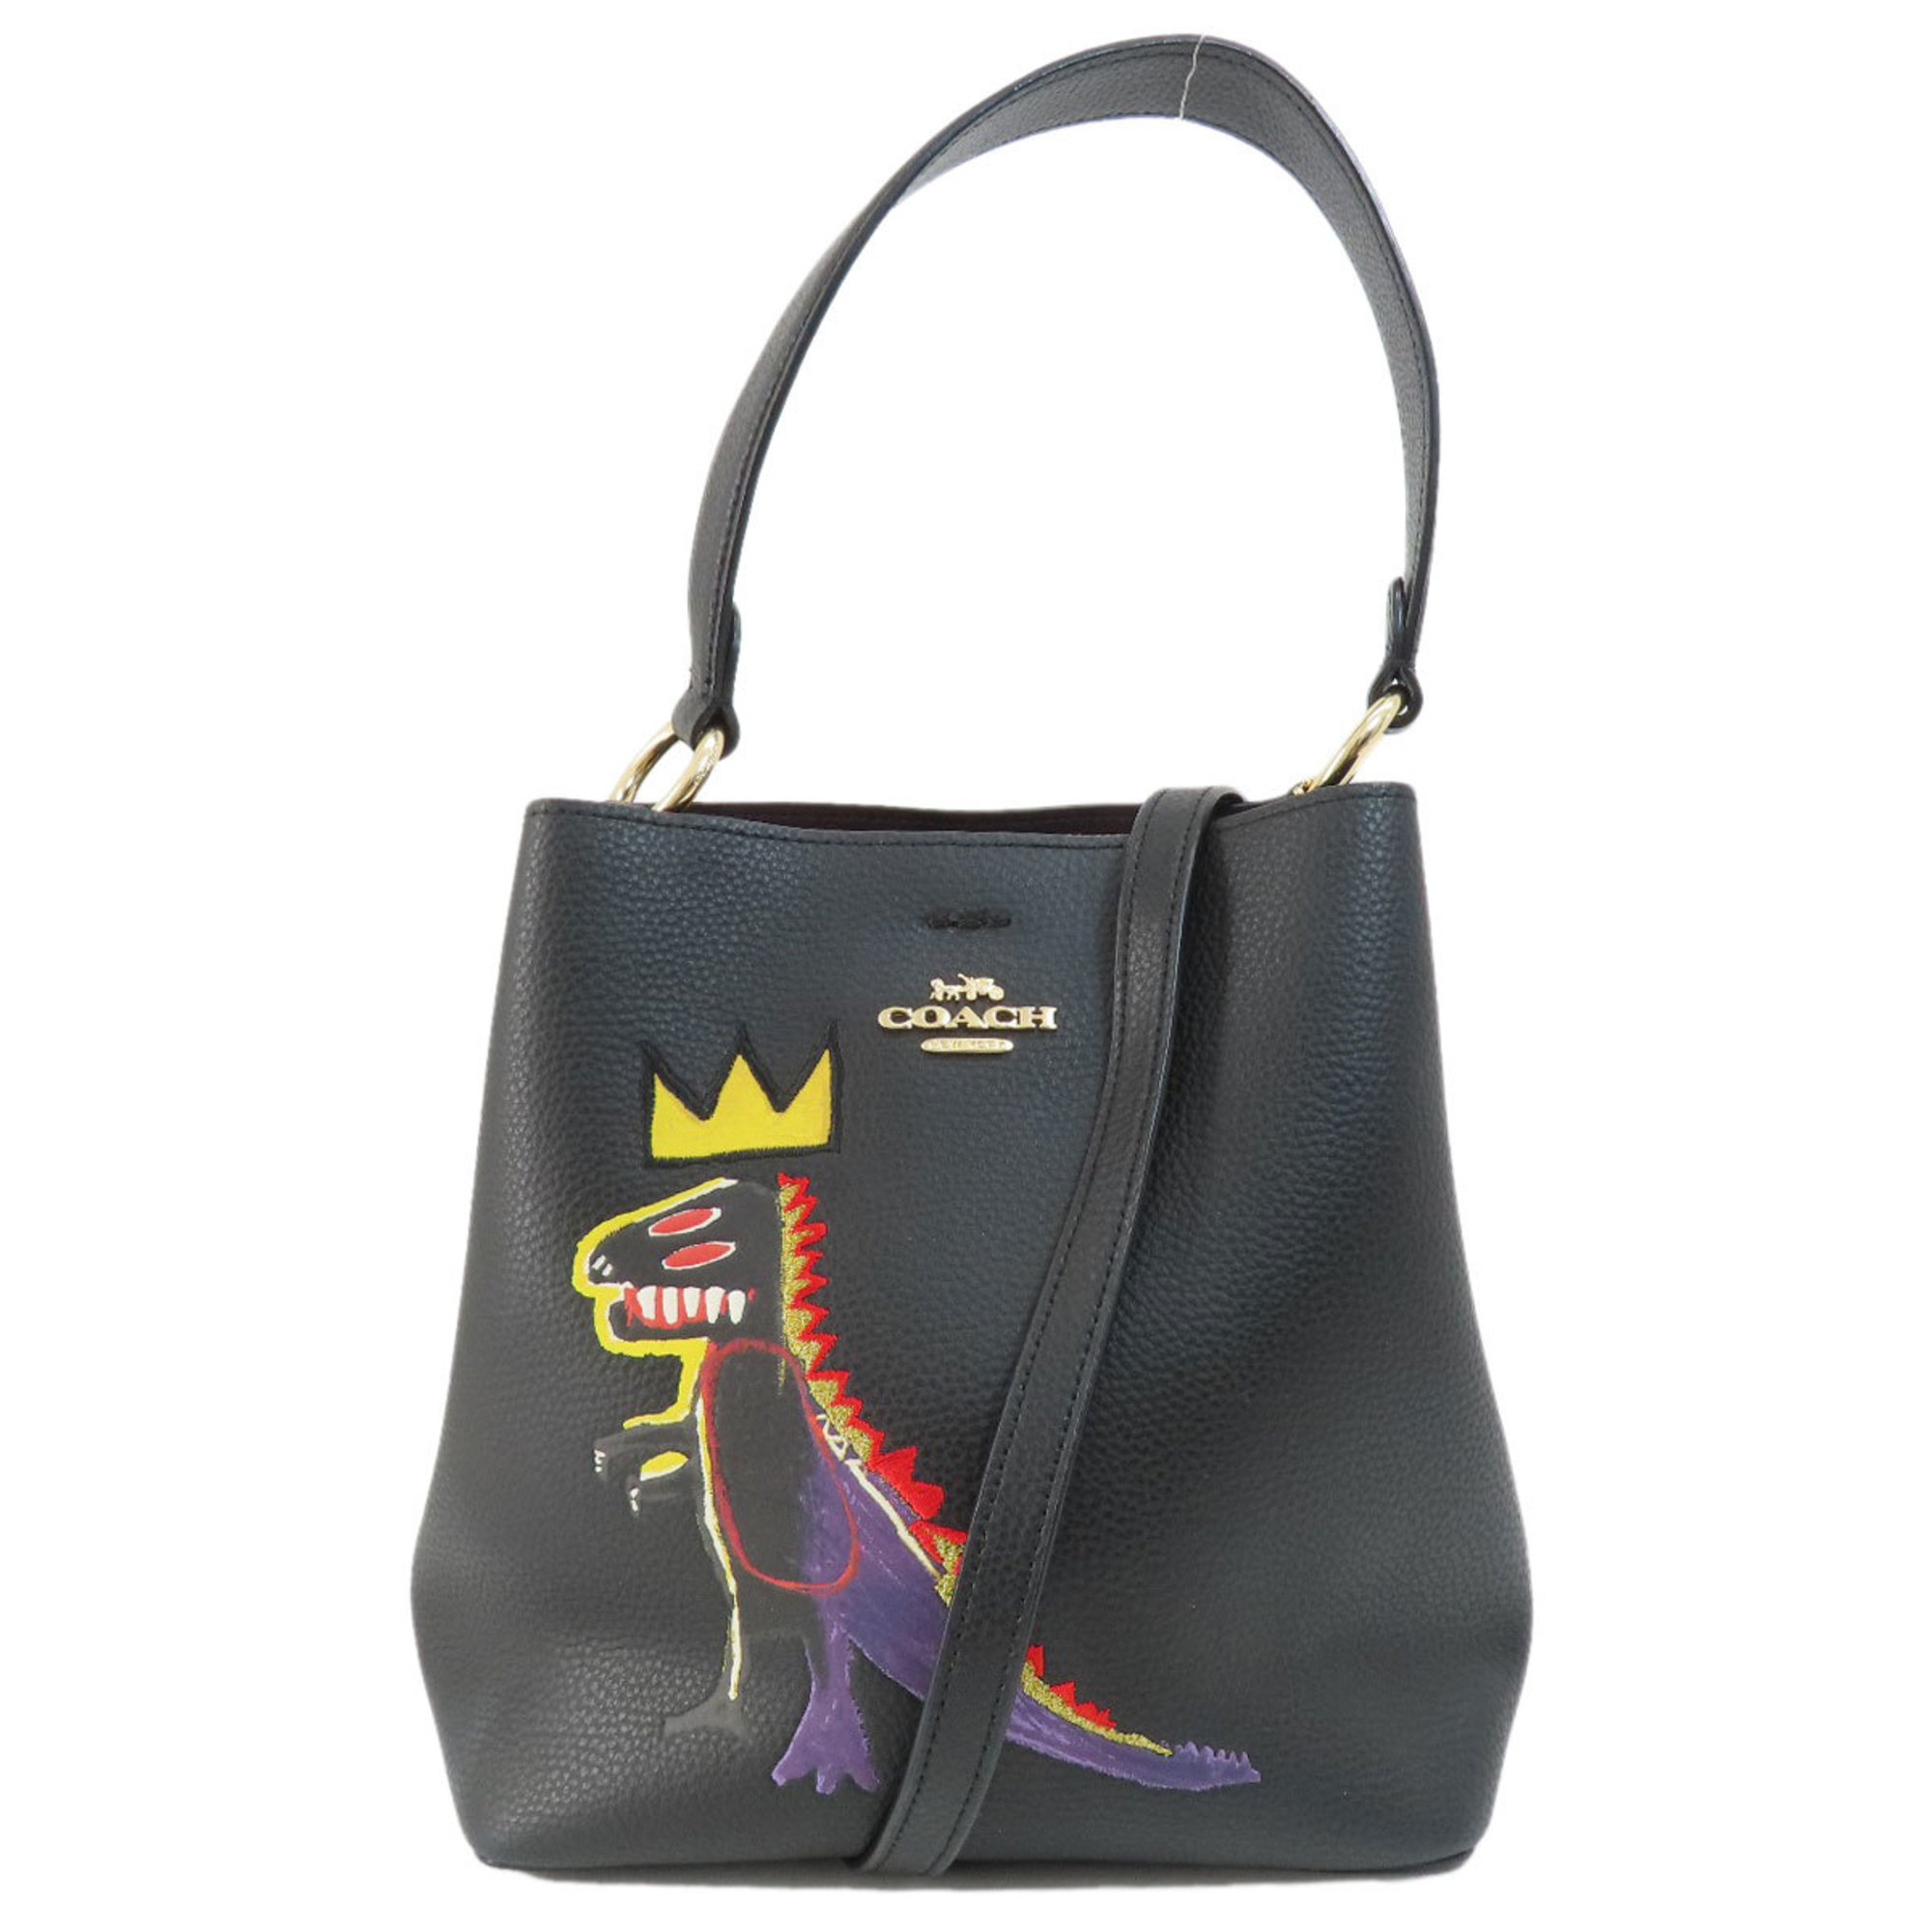 Coach C6073 Basquiat collaboration handbag leather women's COACH